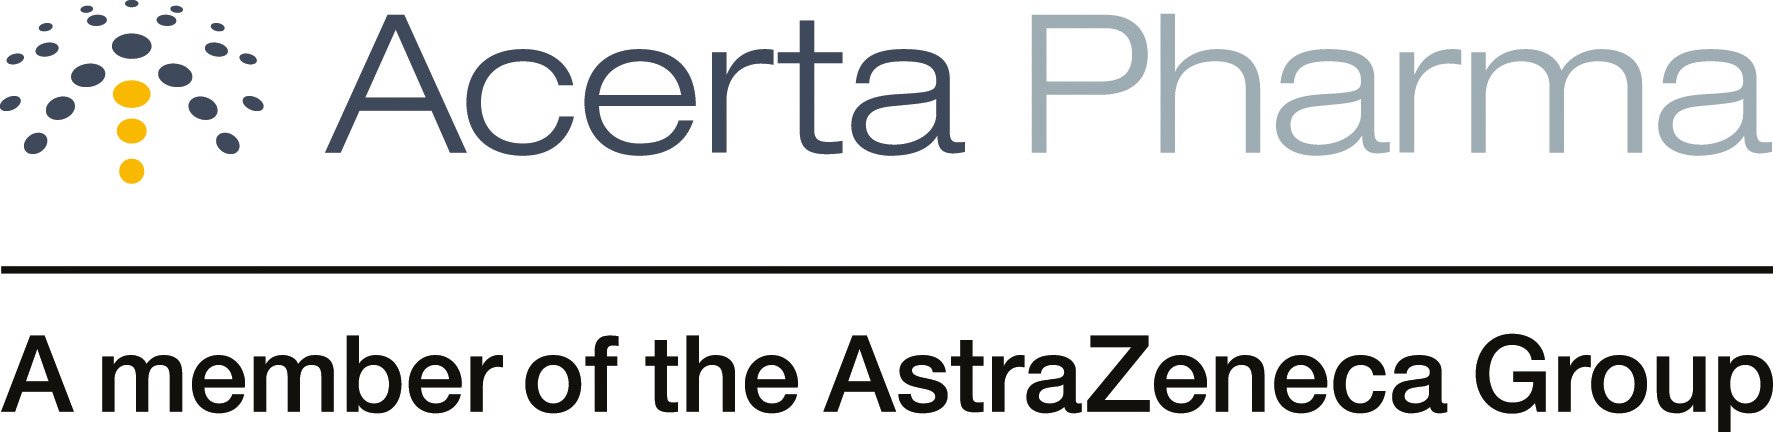 Acerta-Pharma-CS4.jpg